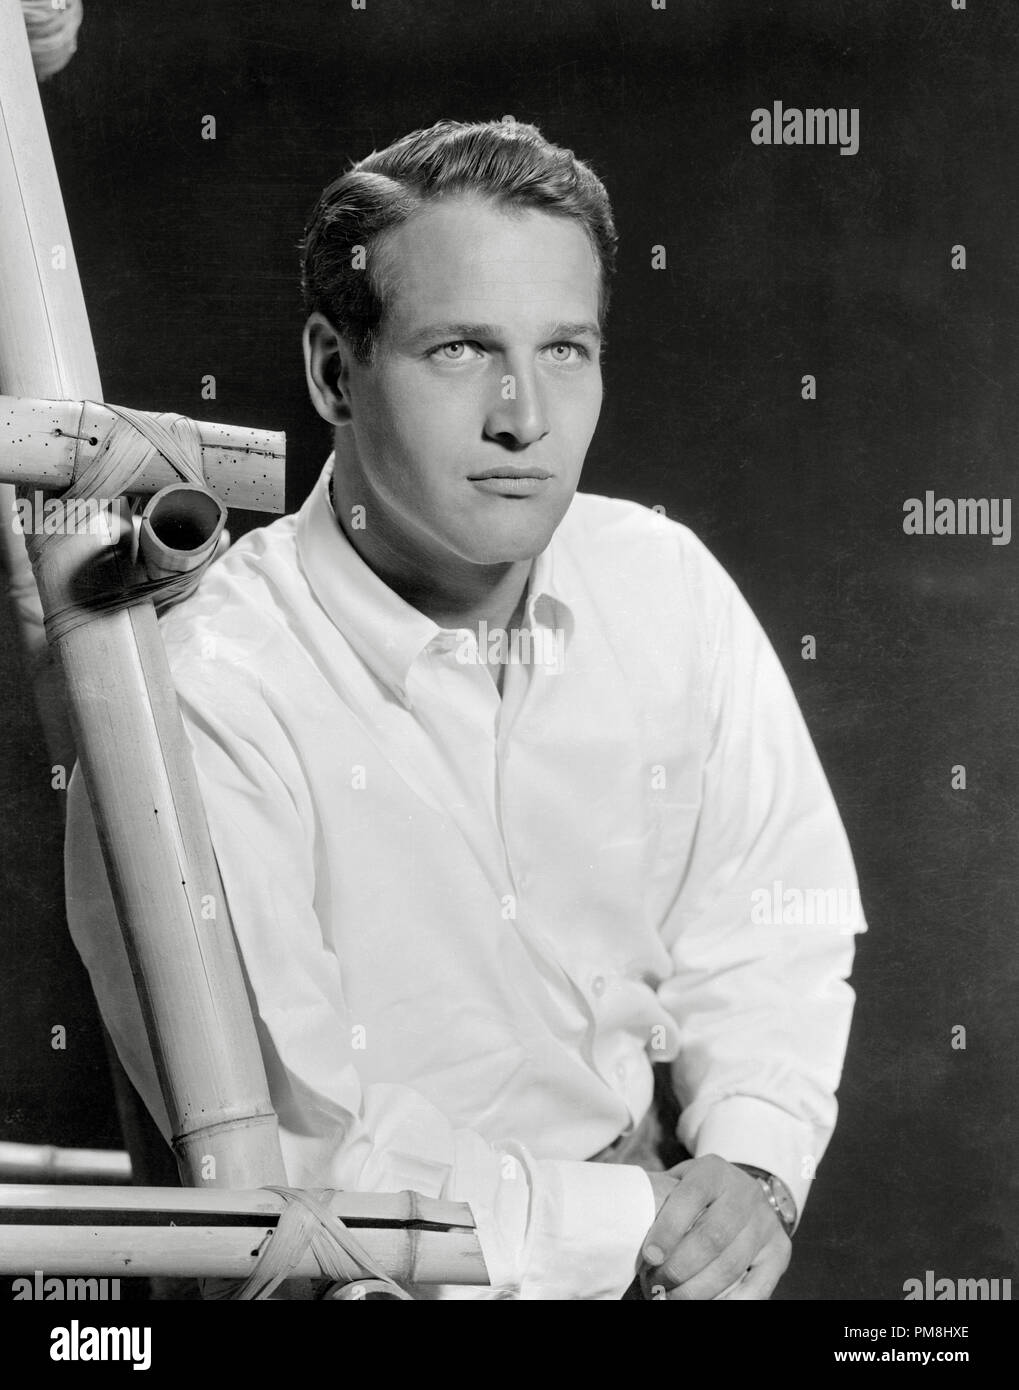 (Archivierung klassische Kino - Paul Newman Retrospektive) Paul Newman, circa 1955. Datei Referenz # 31510 037 THA Stockfoto